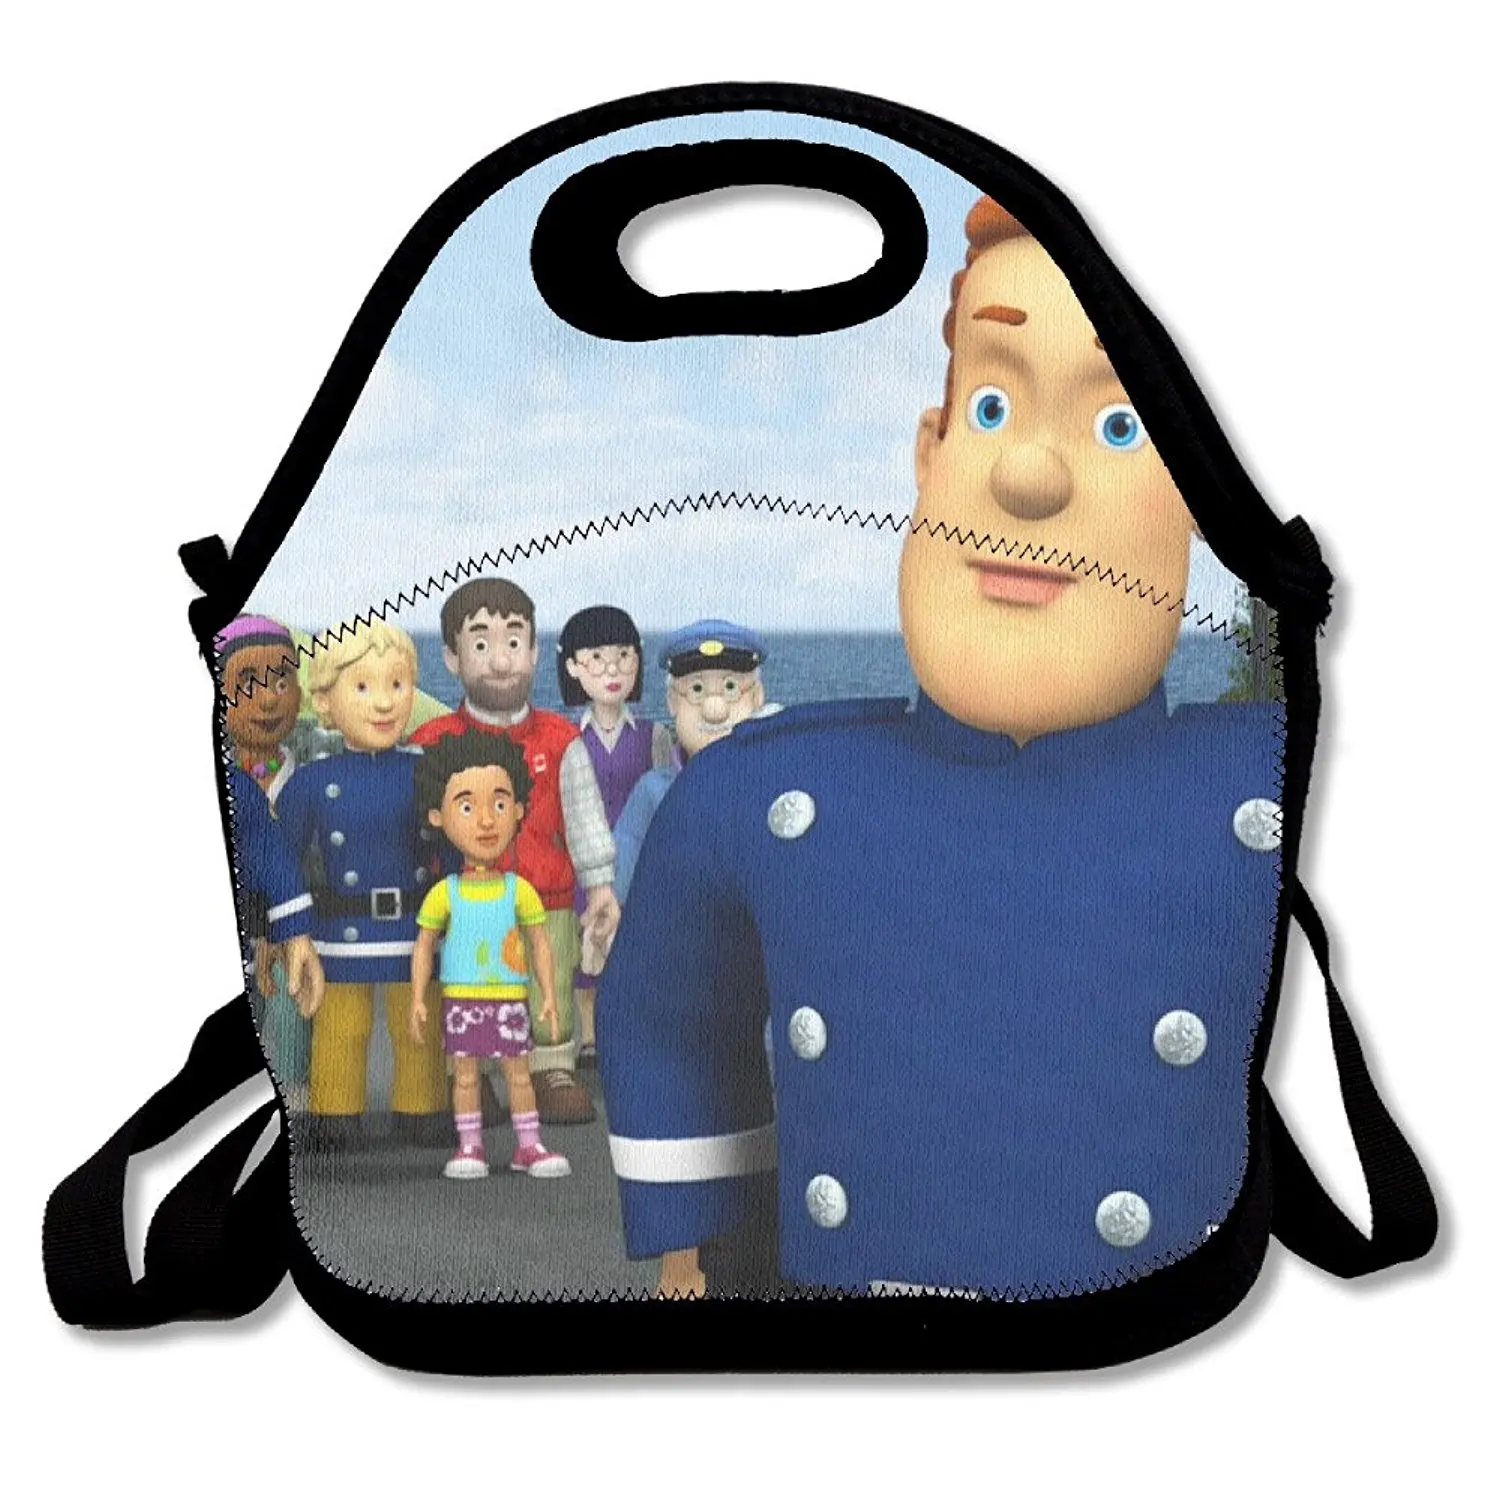 fireman sam lunch bag